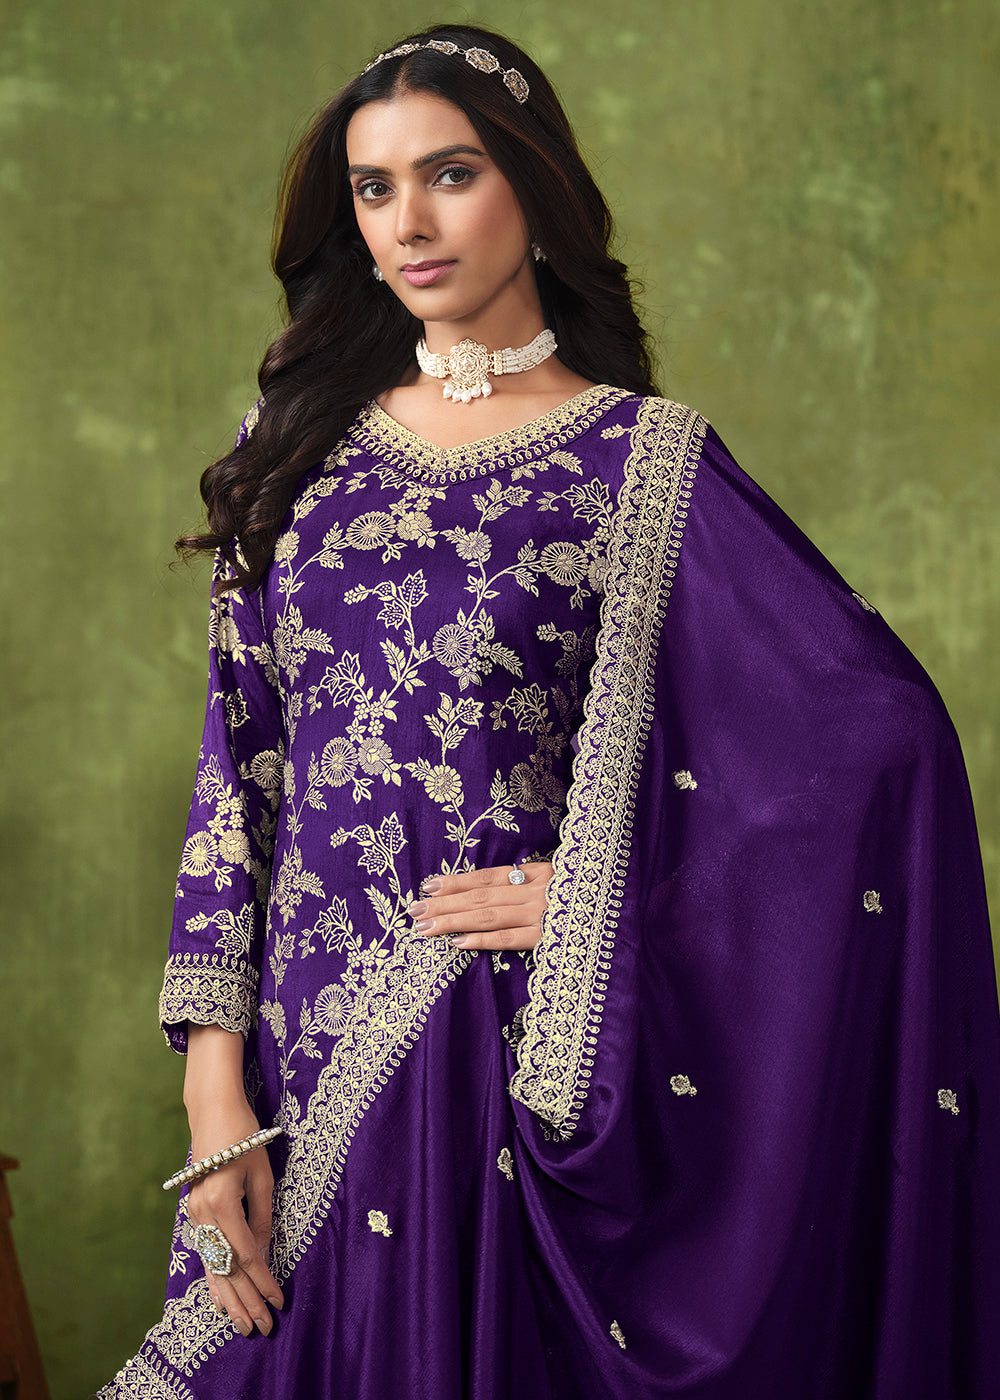 Buy Now Wedding Wear Purple Dola Silk Jacquard Palazzo Suit Online in USA, UK, Canada, Germany, Australia & Worldwide at Empress Clothing.